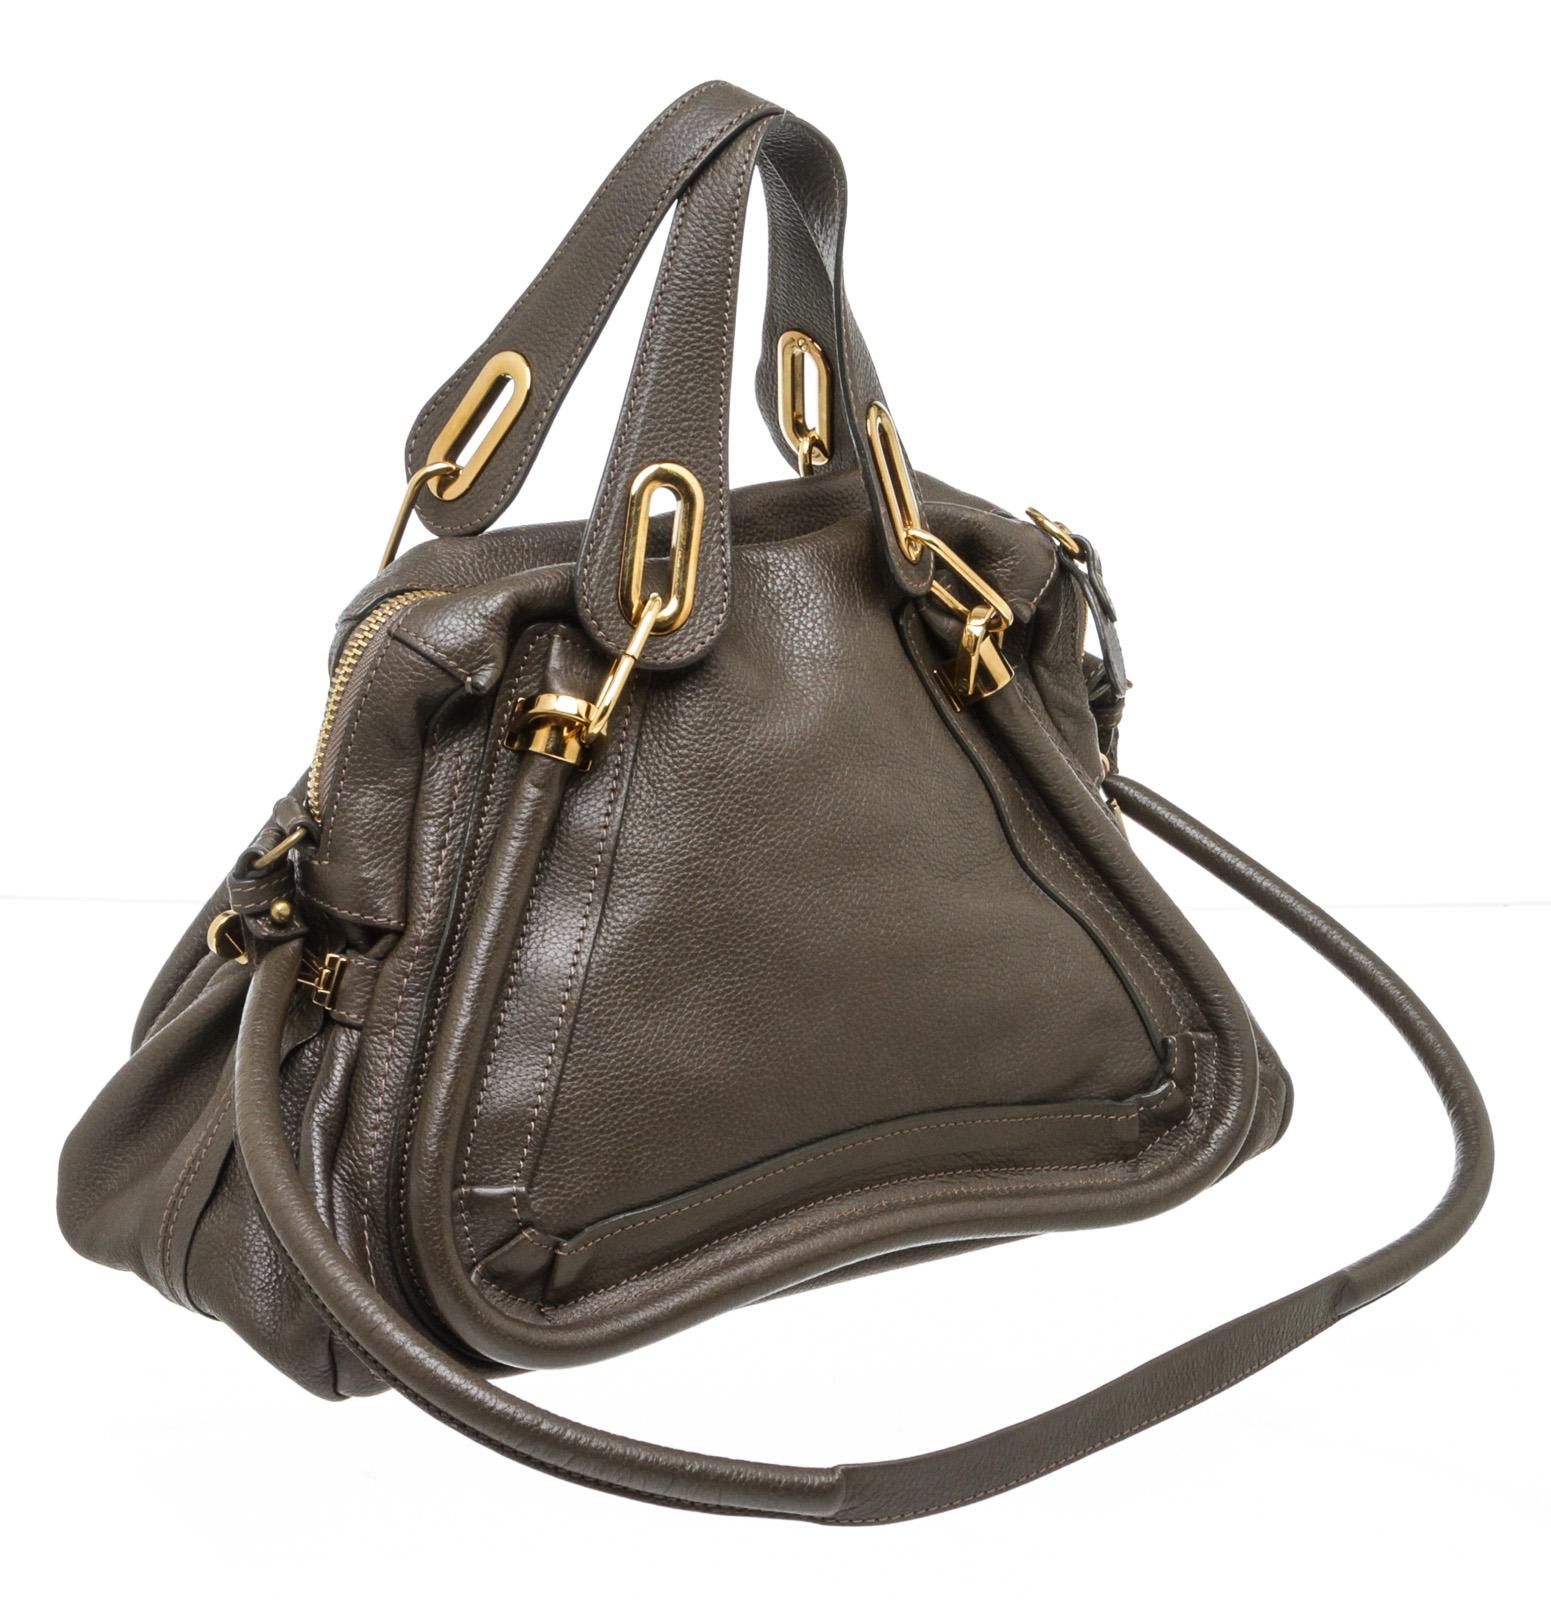 Chloe Brown Leather Paraty Medium Satchel Handbag 4